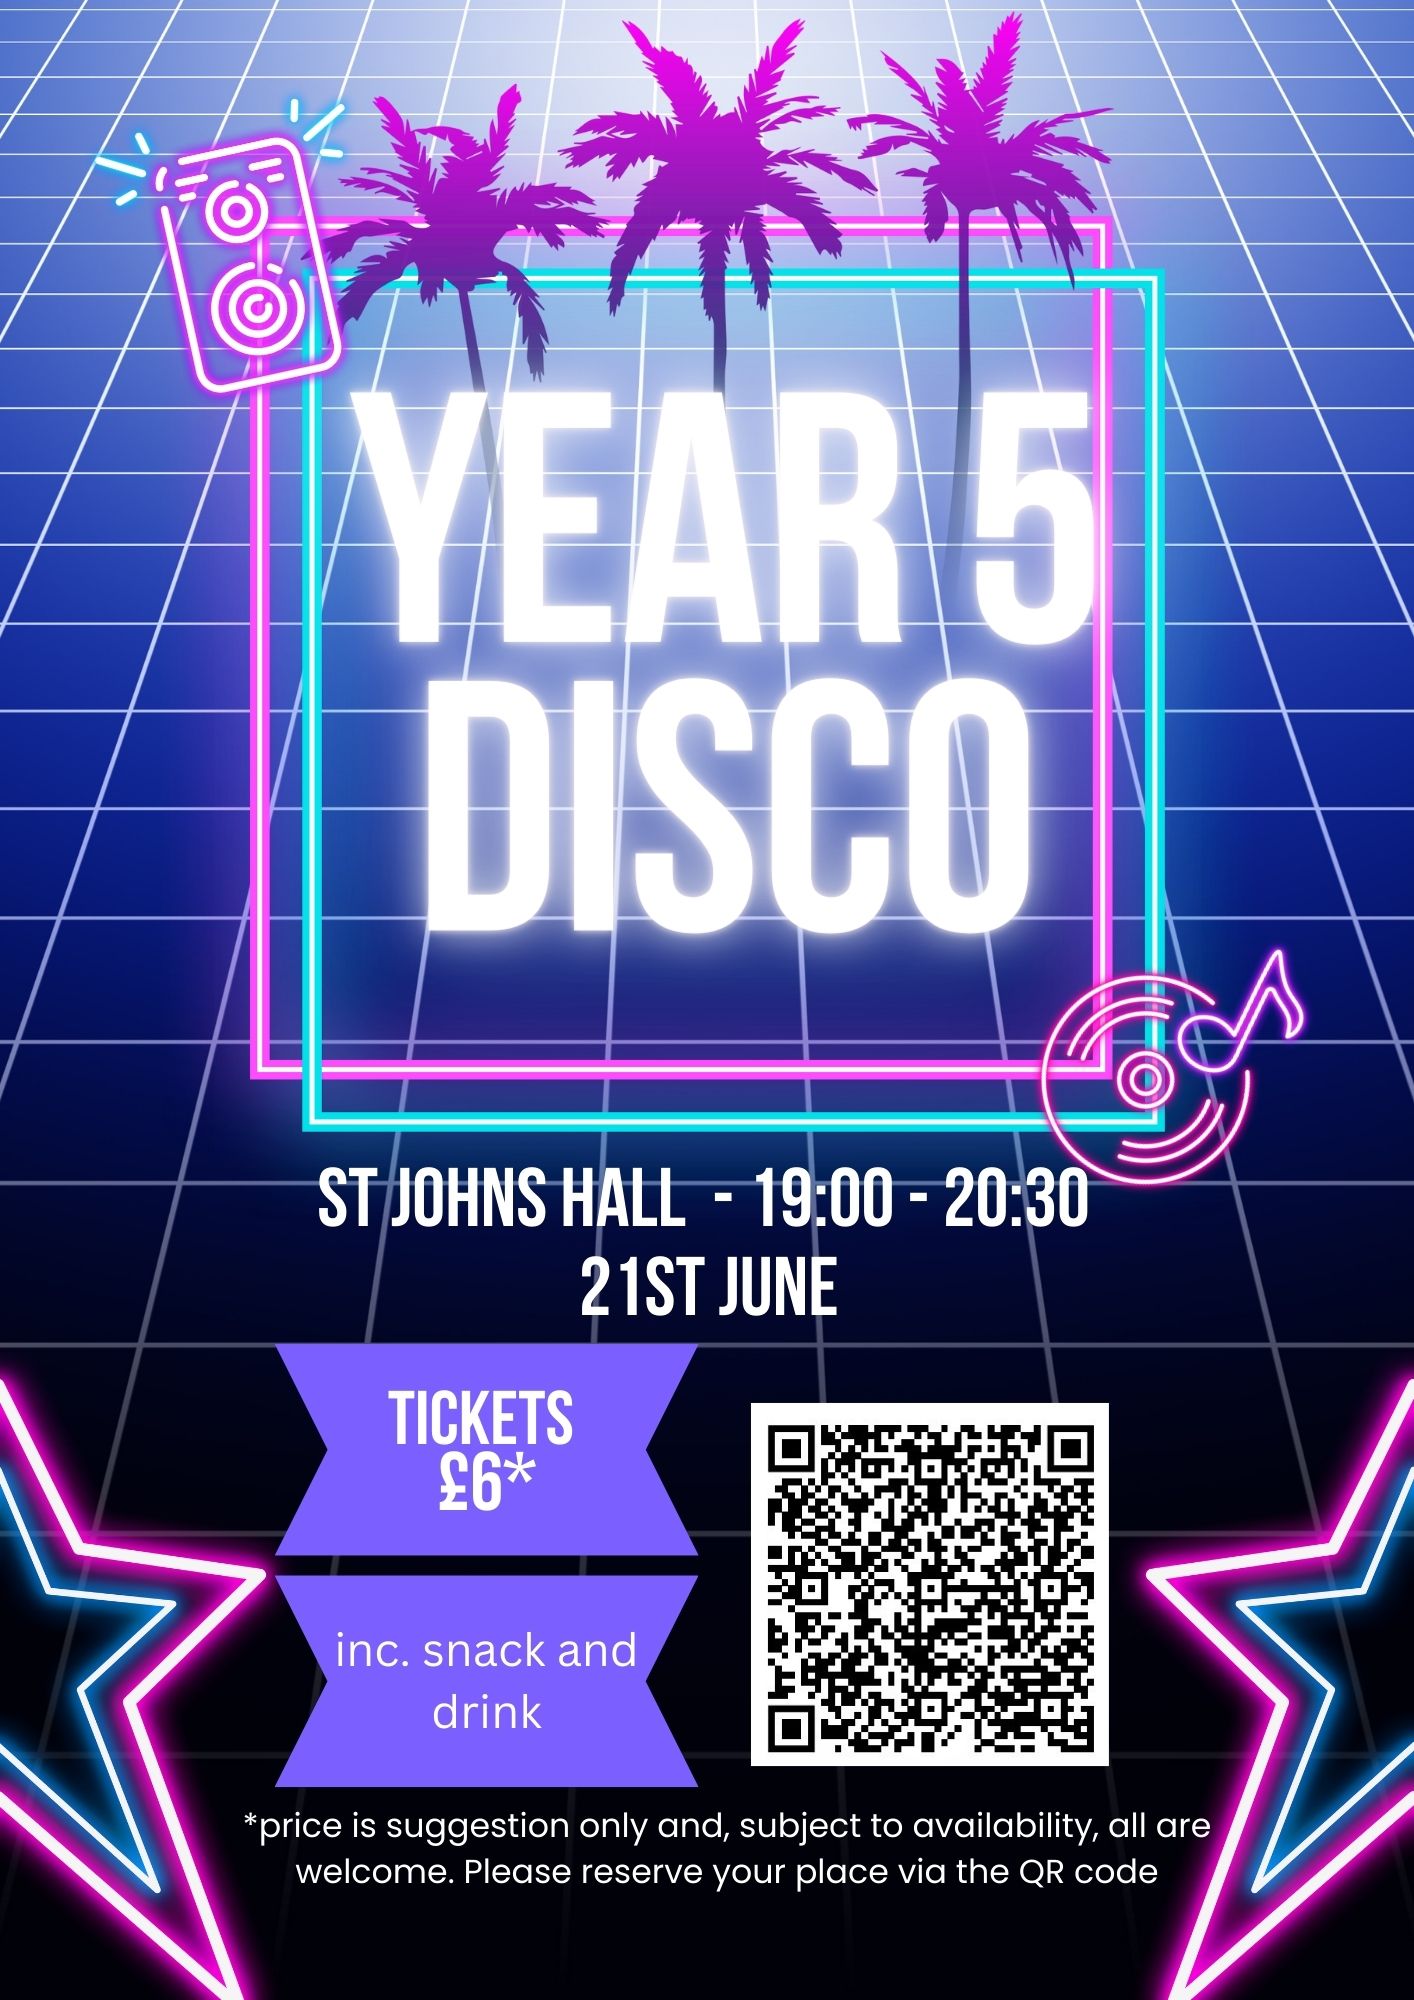 Year 5 Disco poster vs.3